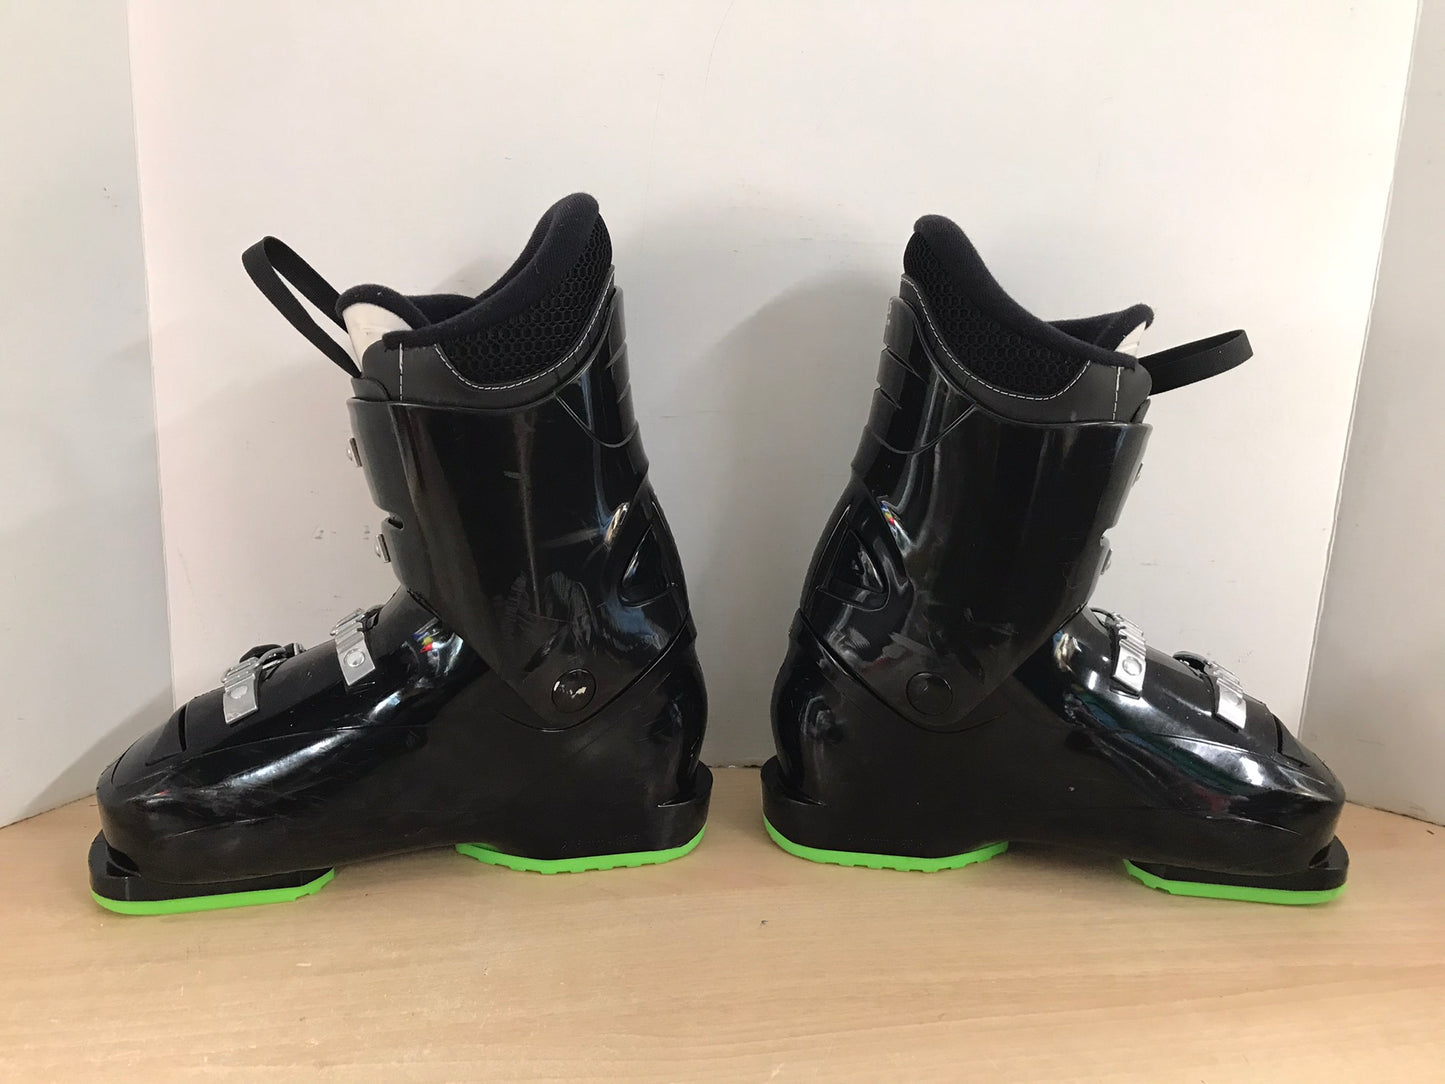 Ski Boots Mondo Size 23.5 Child Size 5 Shoe Size 262 mm Rossignol Black Lime New Demo Model